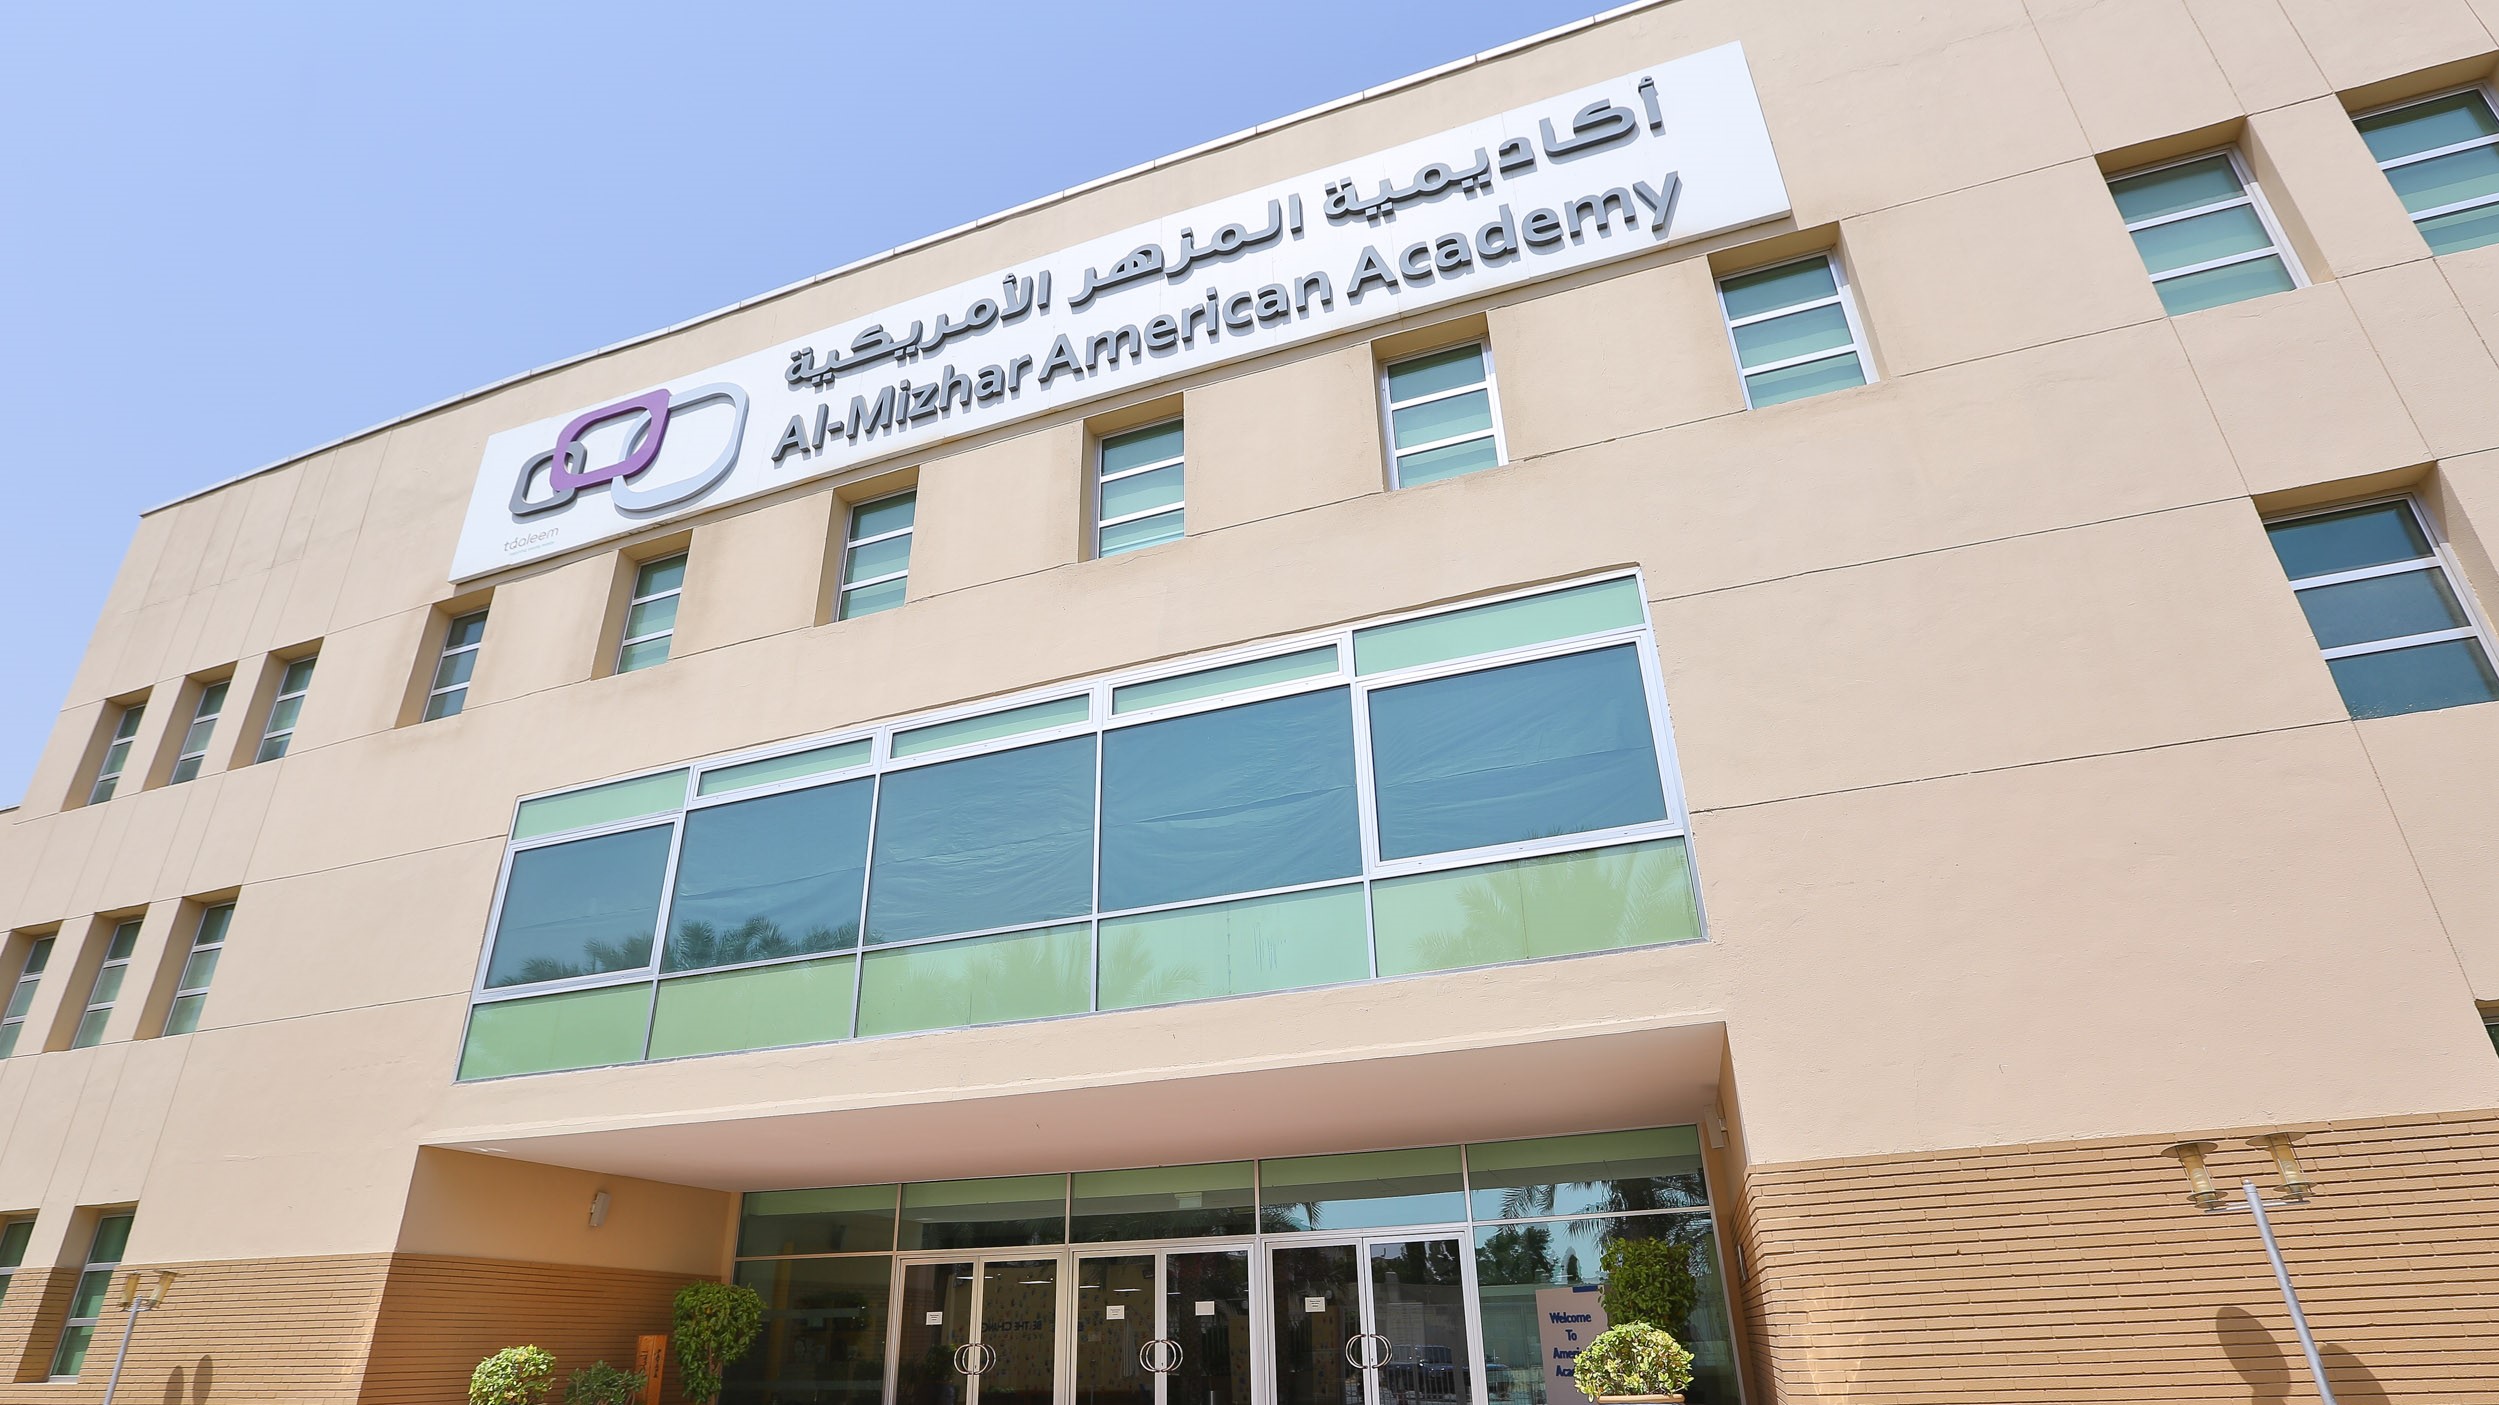 al-mizhar-american-academy-best-american-schools-dubai-uae